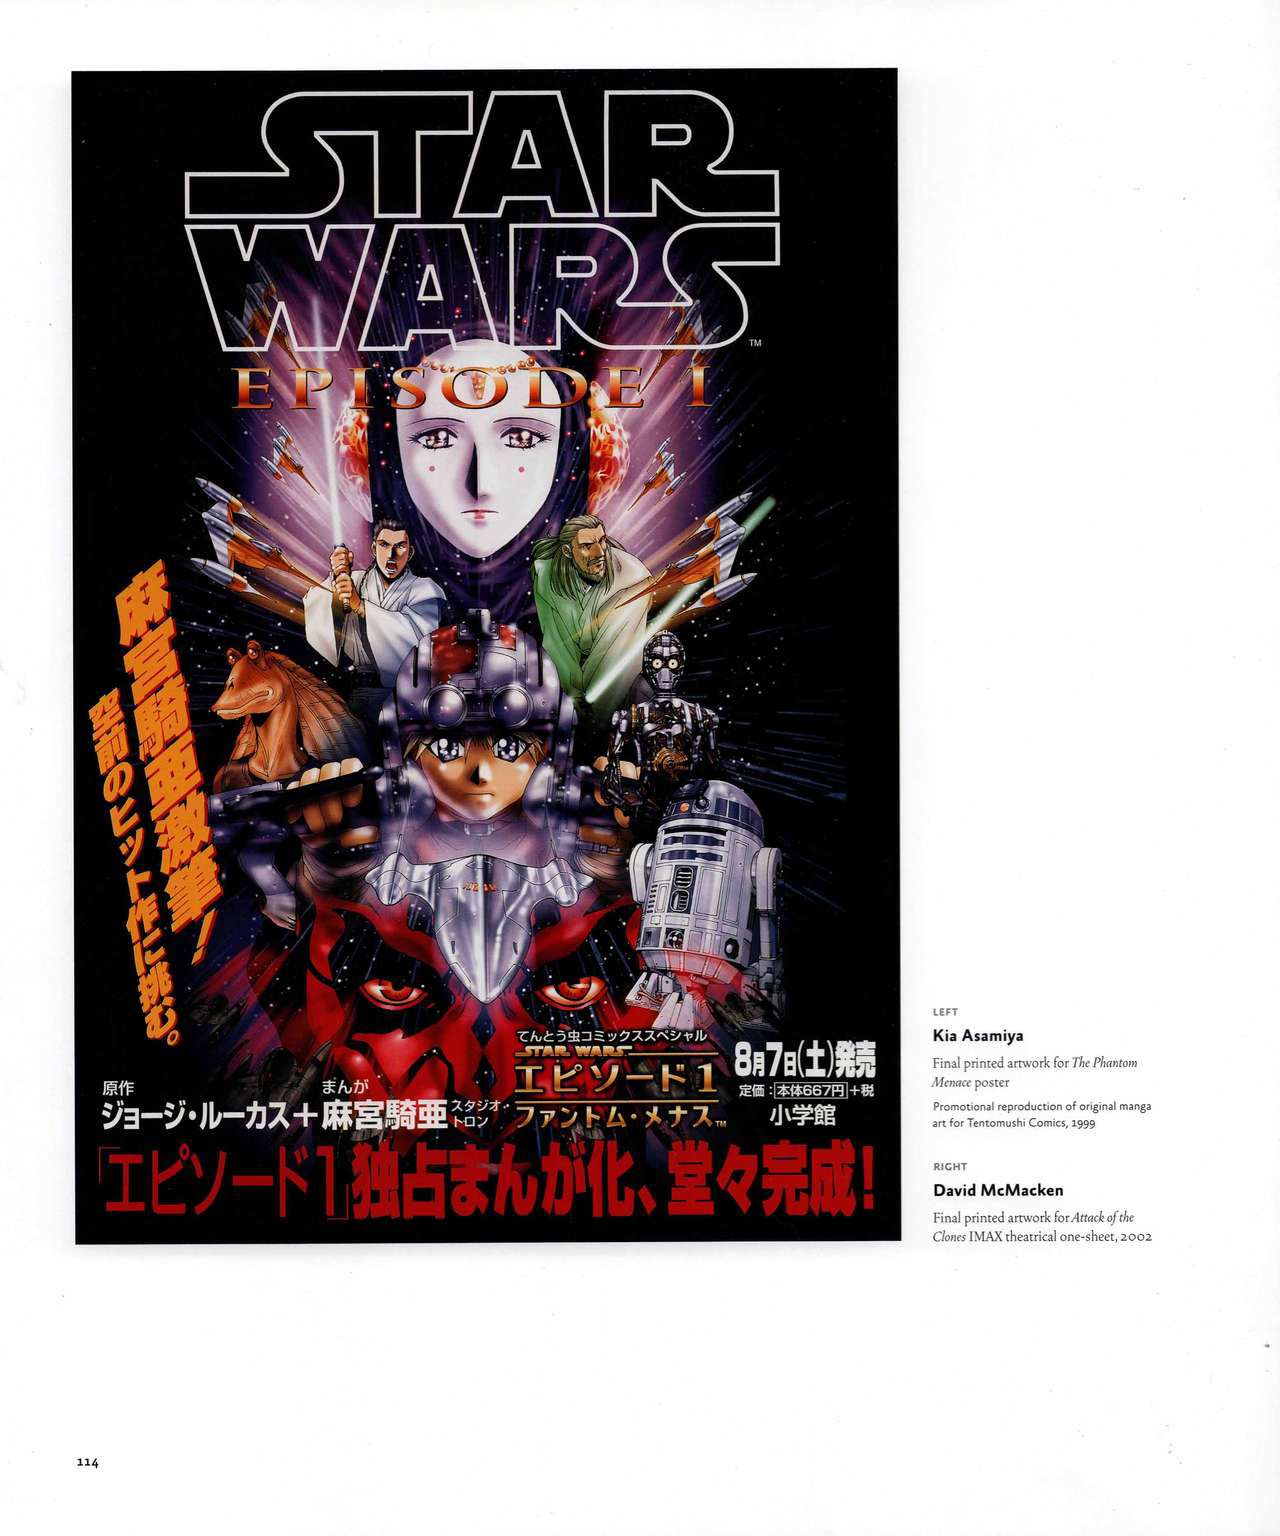 Star Wars Art - Posters 102